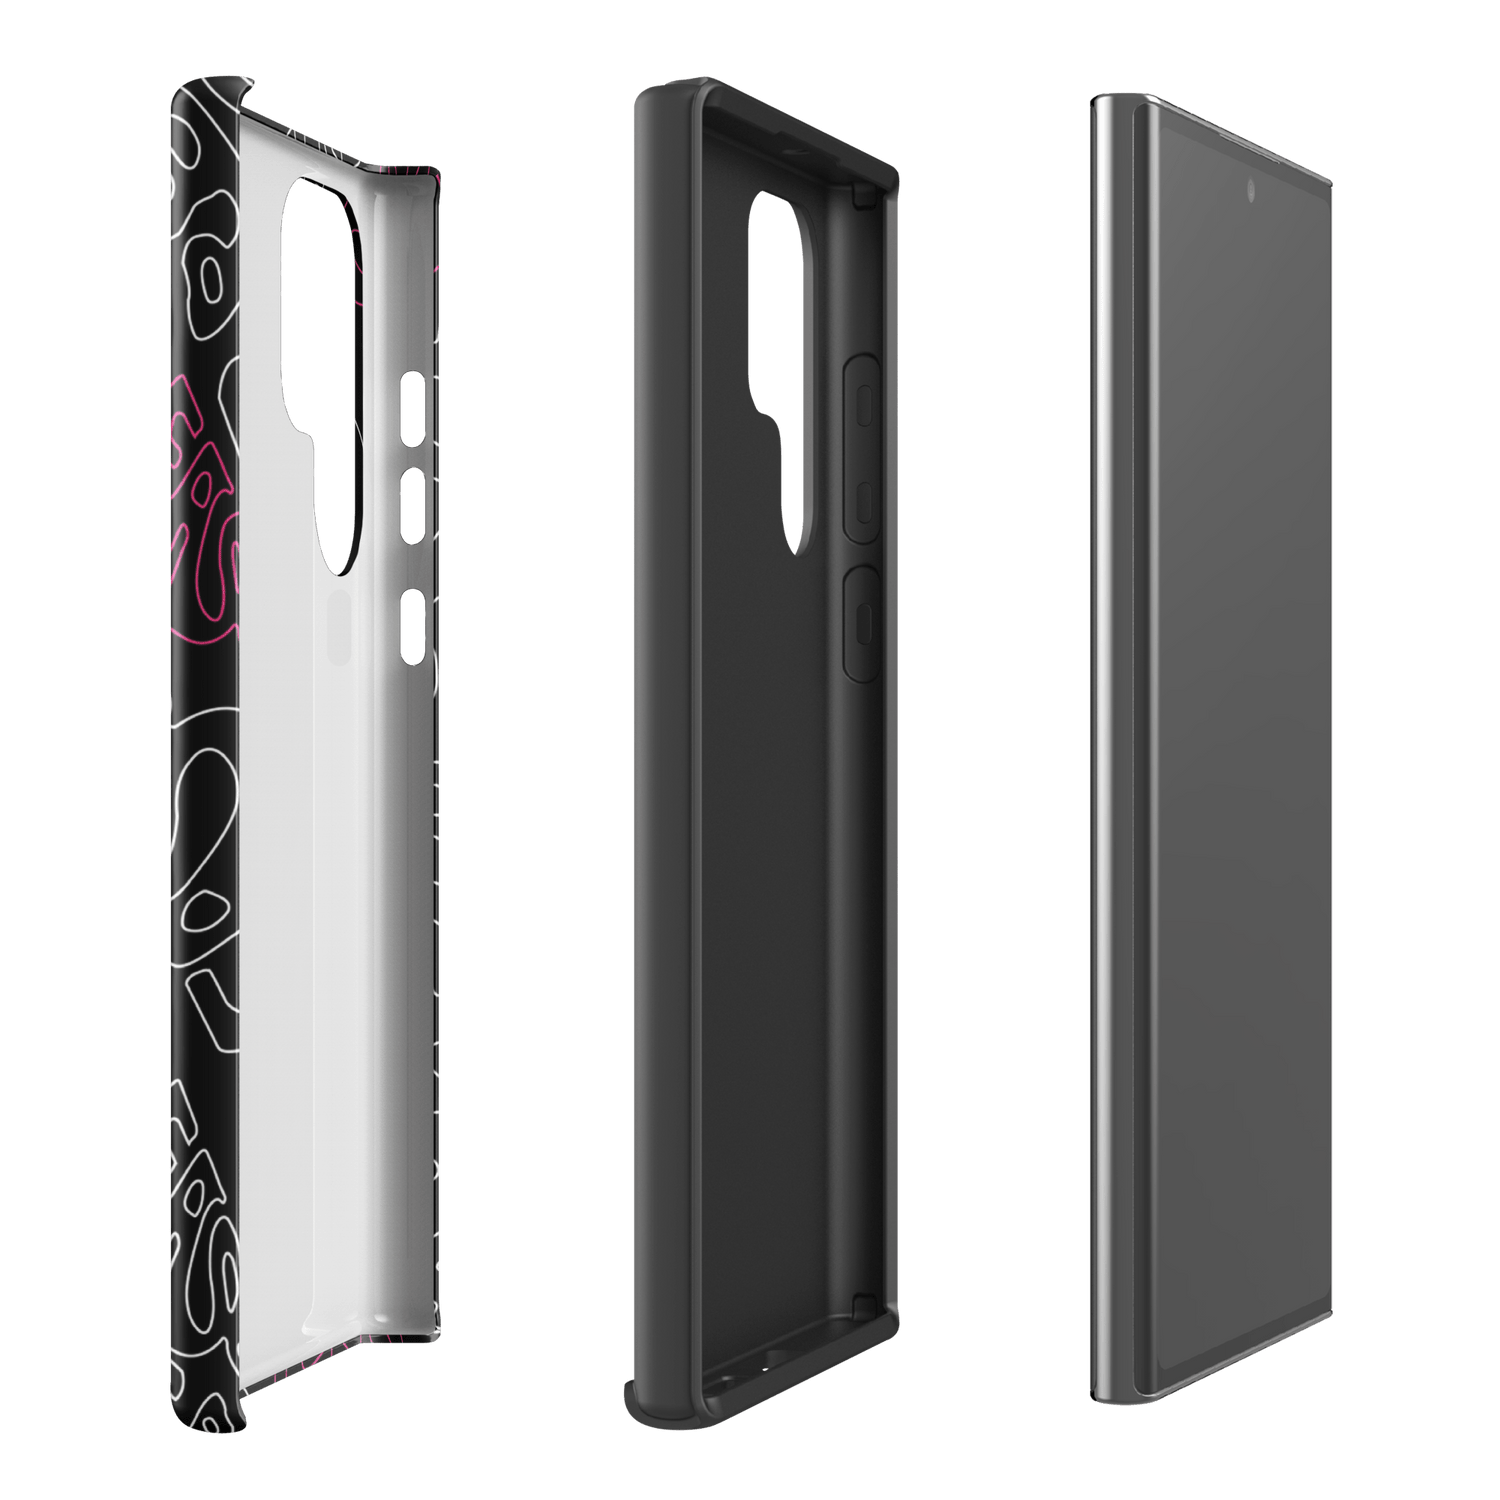 Grease Pattern Tough Phone Case - Samsung - Paramount Shop